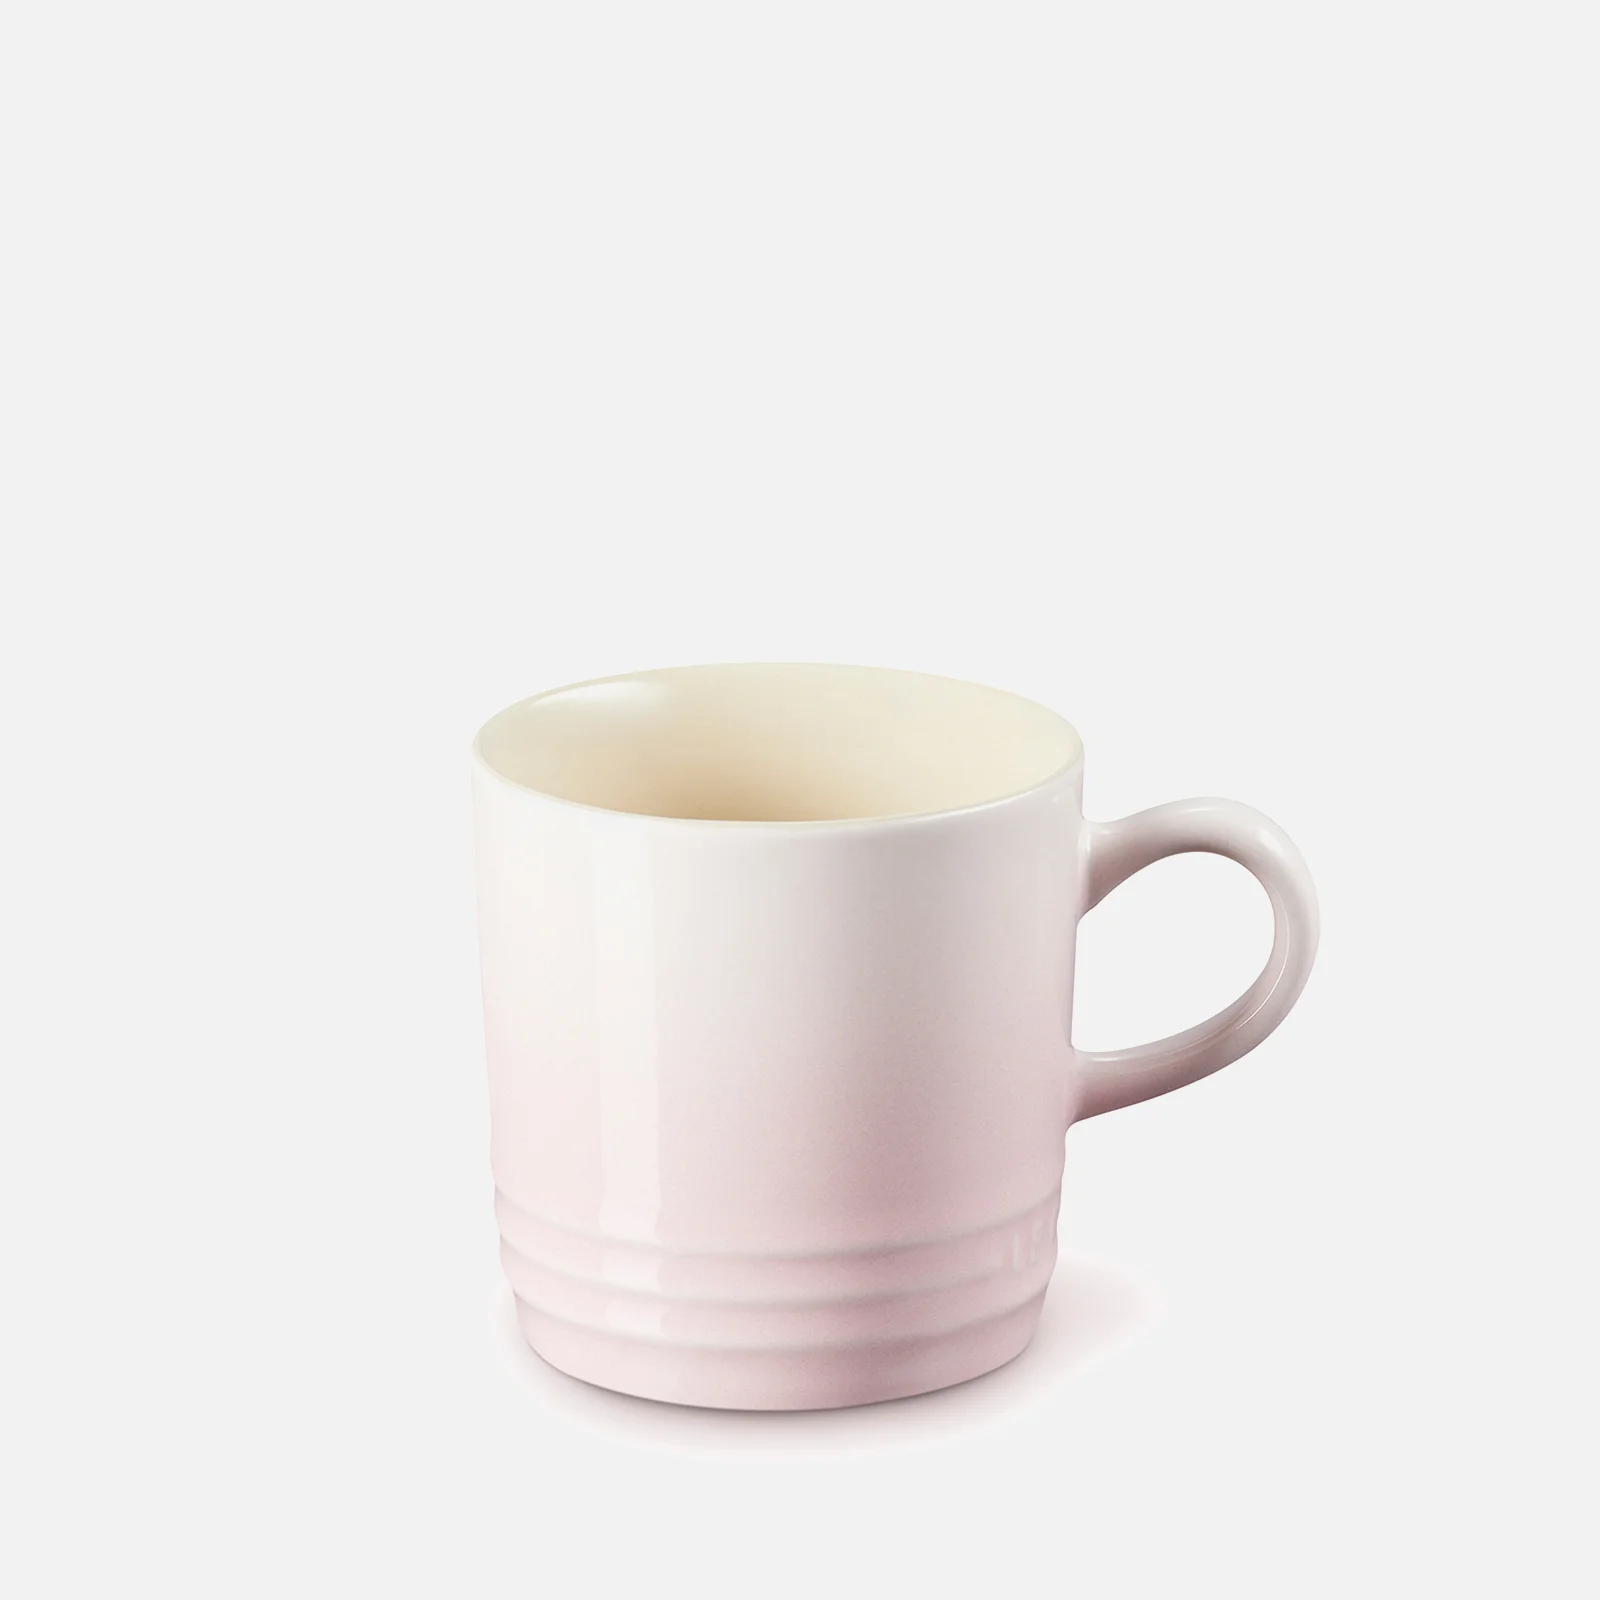 Le Creuset Stoneware Cappuccino Mug - 200ml - Shell Pink Image 1